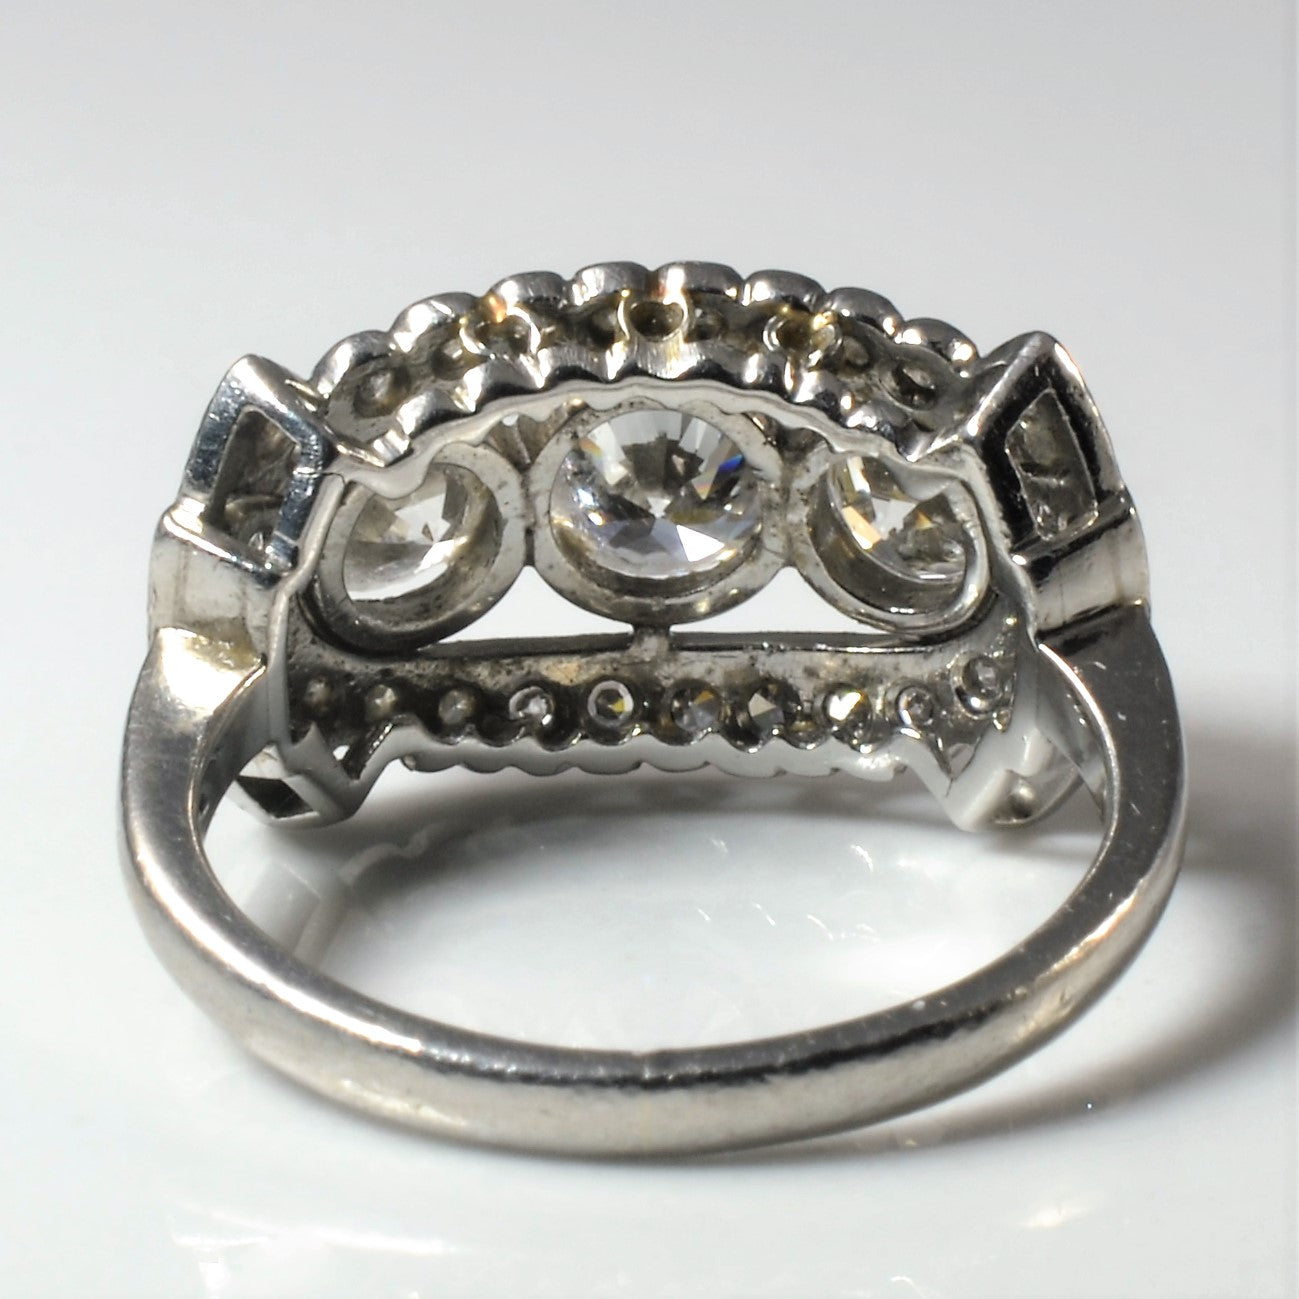 Art Deco Inspired Three Stone Engagement Ring | 2.01ctw | SZ 7 |